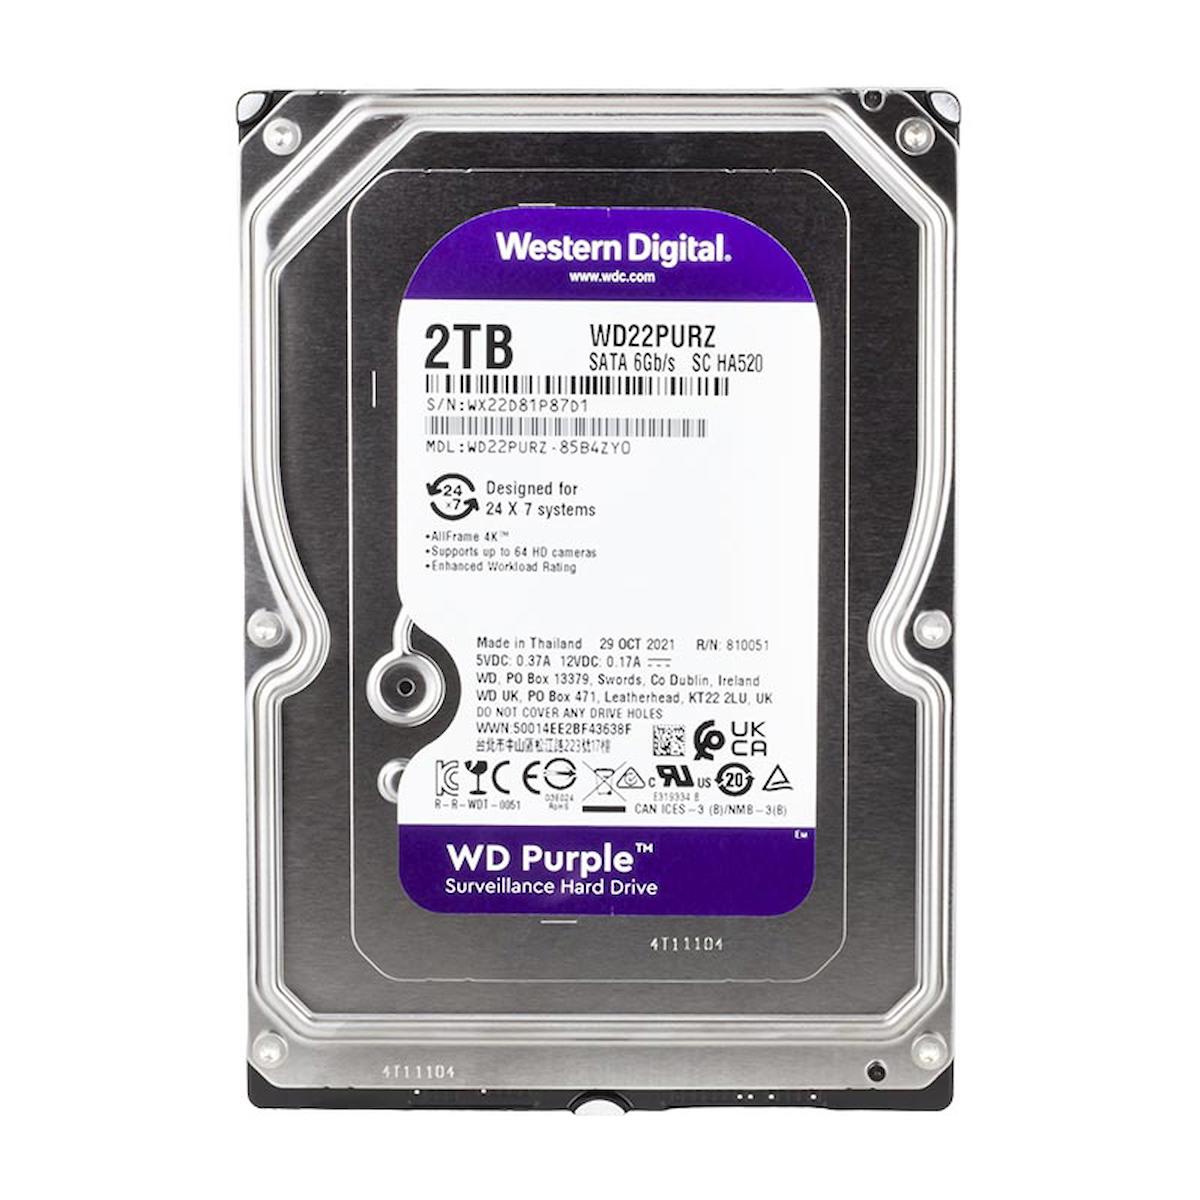 Western Digital WD Purple WD22PURZ 2 TB 3.5 inç 5400 RPM 64 MB SATA 3.0 Güvenlik Kamerası Harddisk